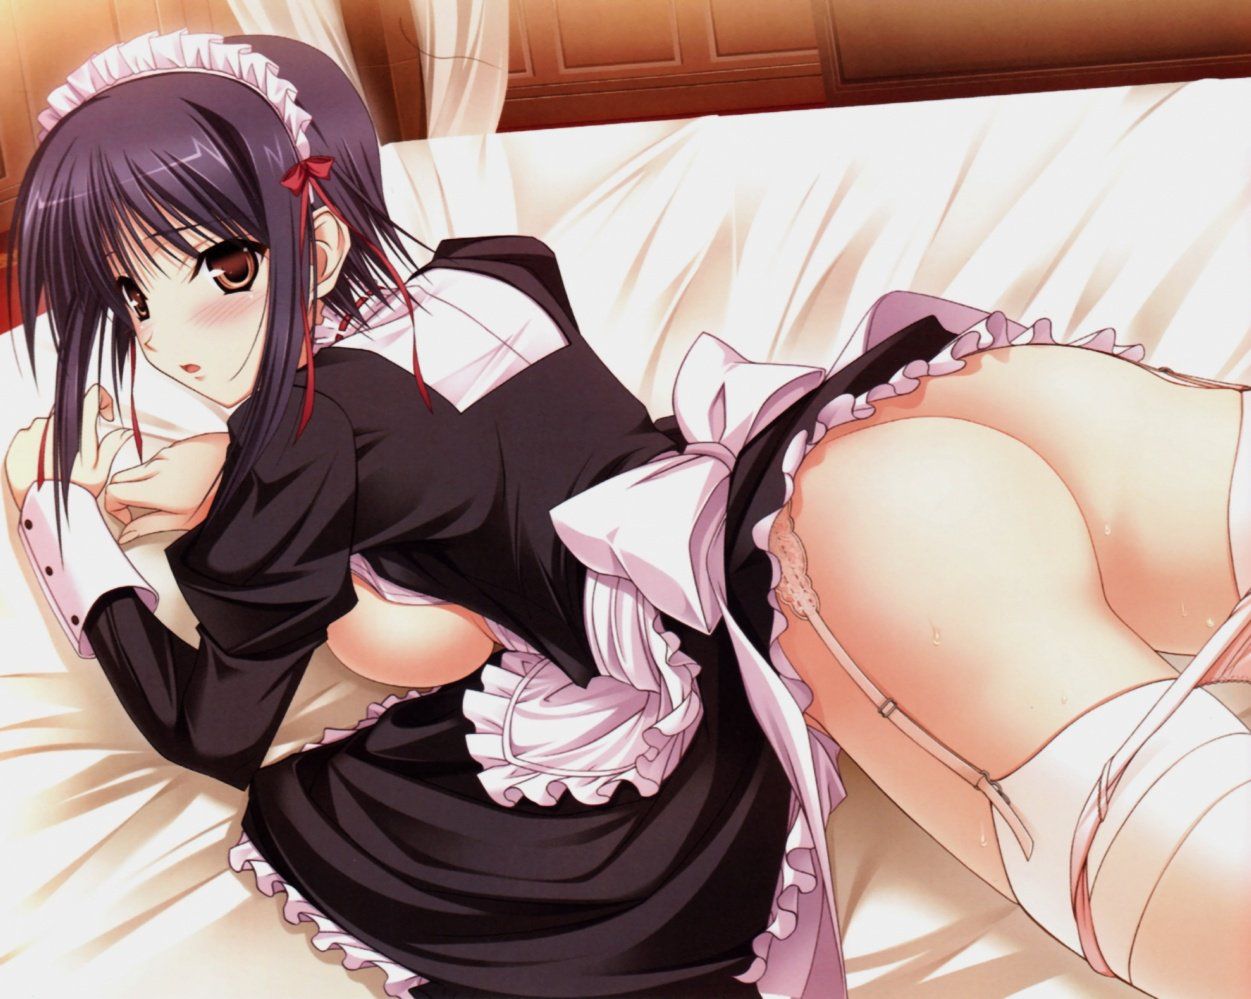 [Maid] erotica image summary of two-dimensional maid beautiful girl. vol.27 42